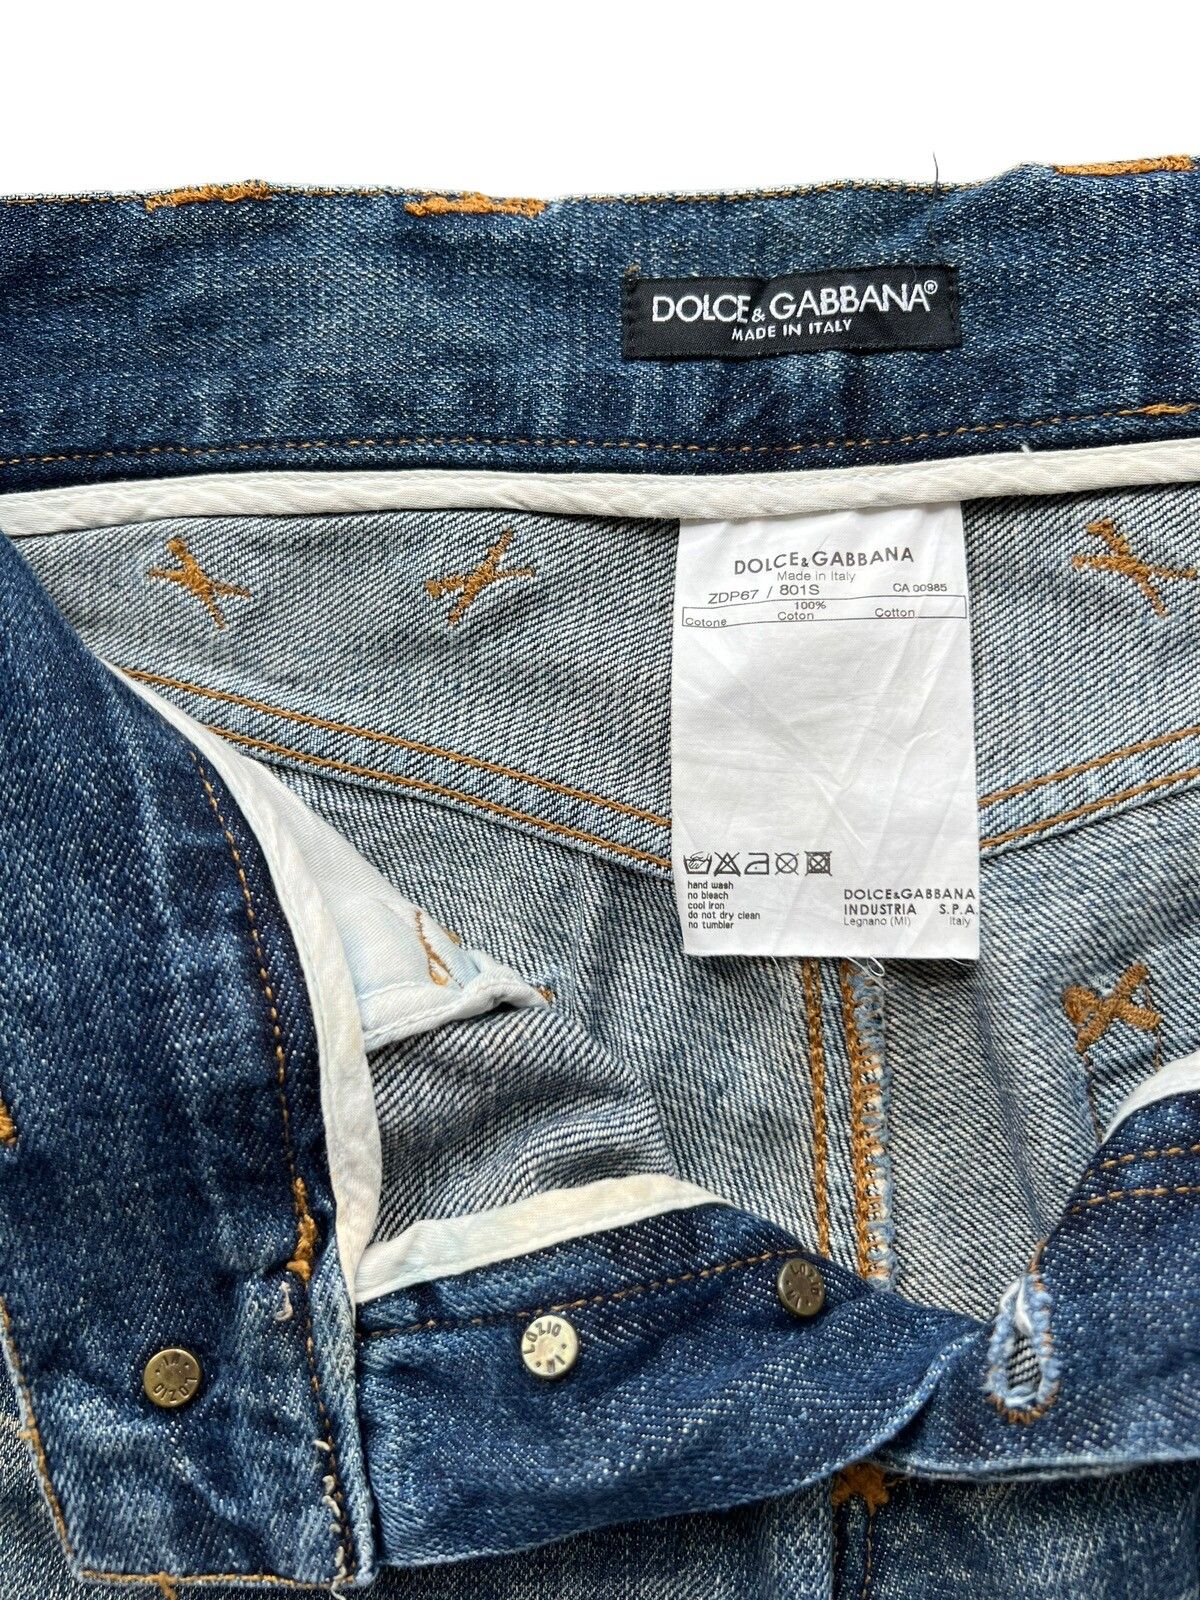 Dolce and Gabbana Crash Distressed Denim Jeans 31x32.5 - 13